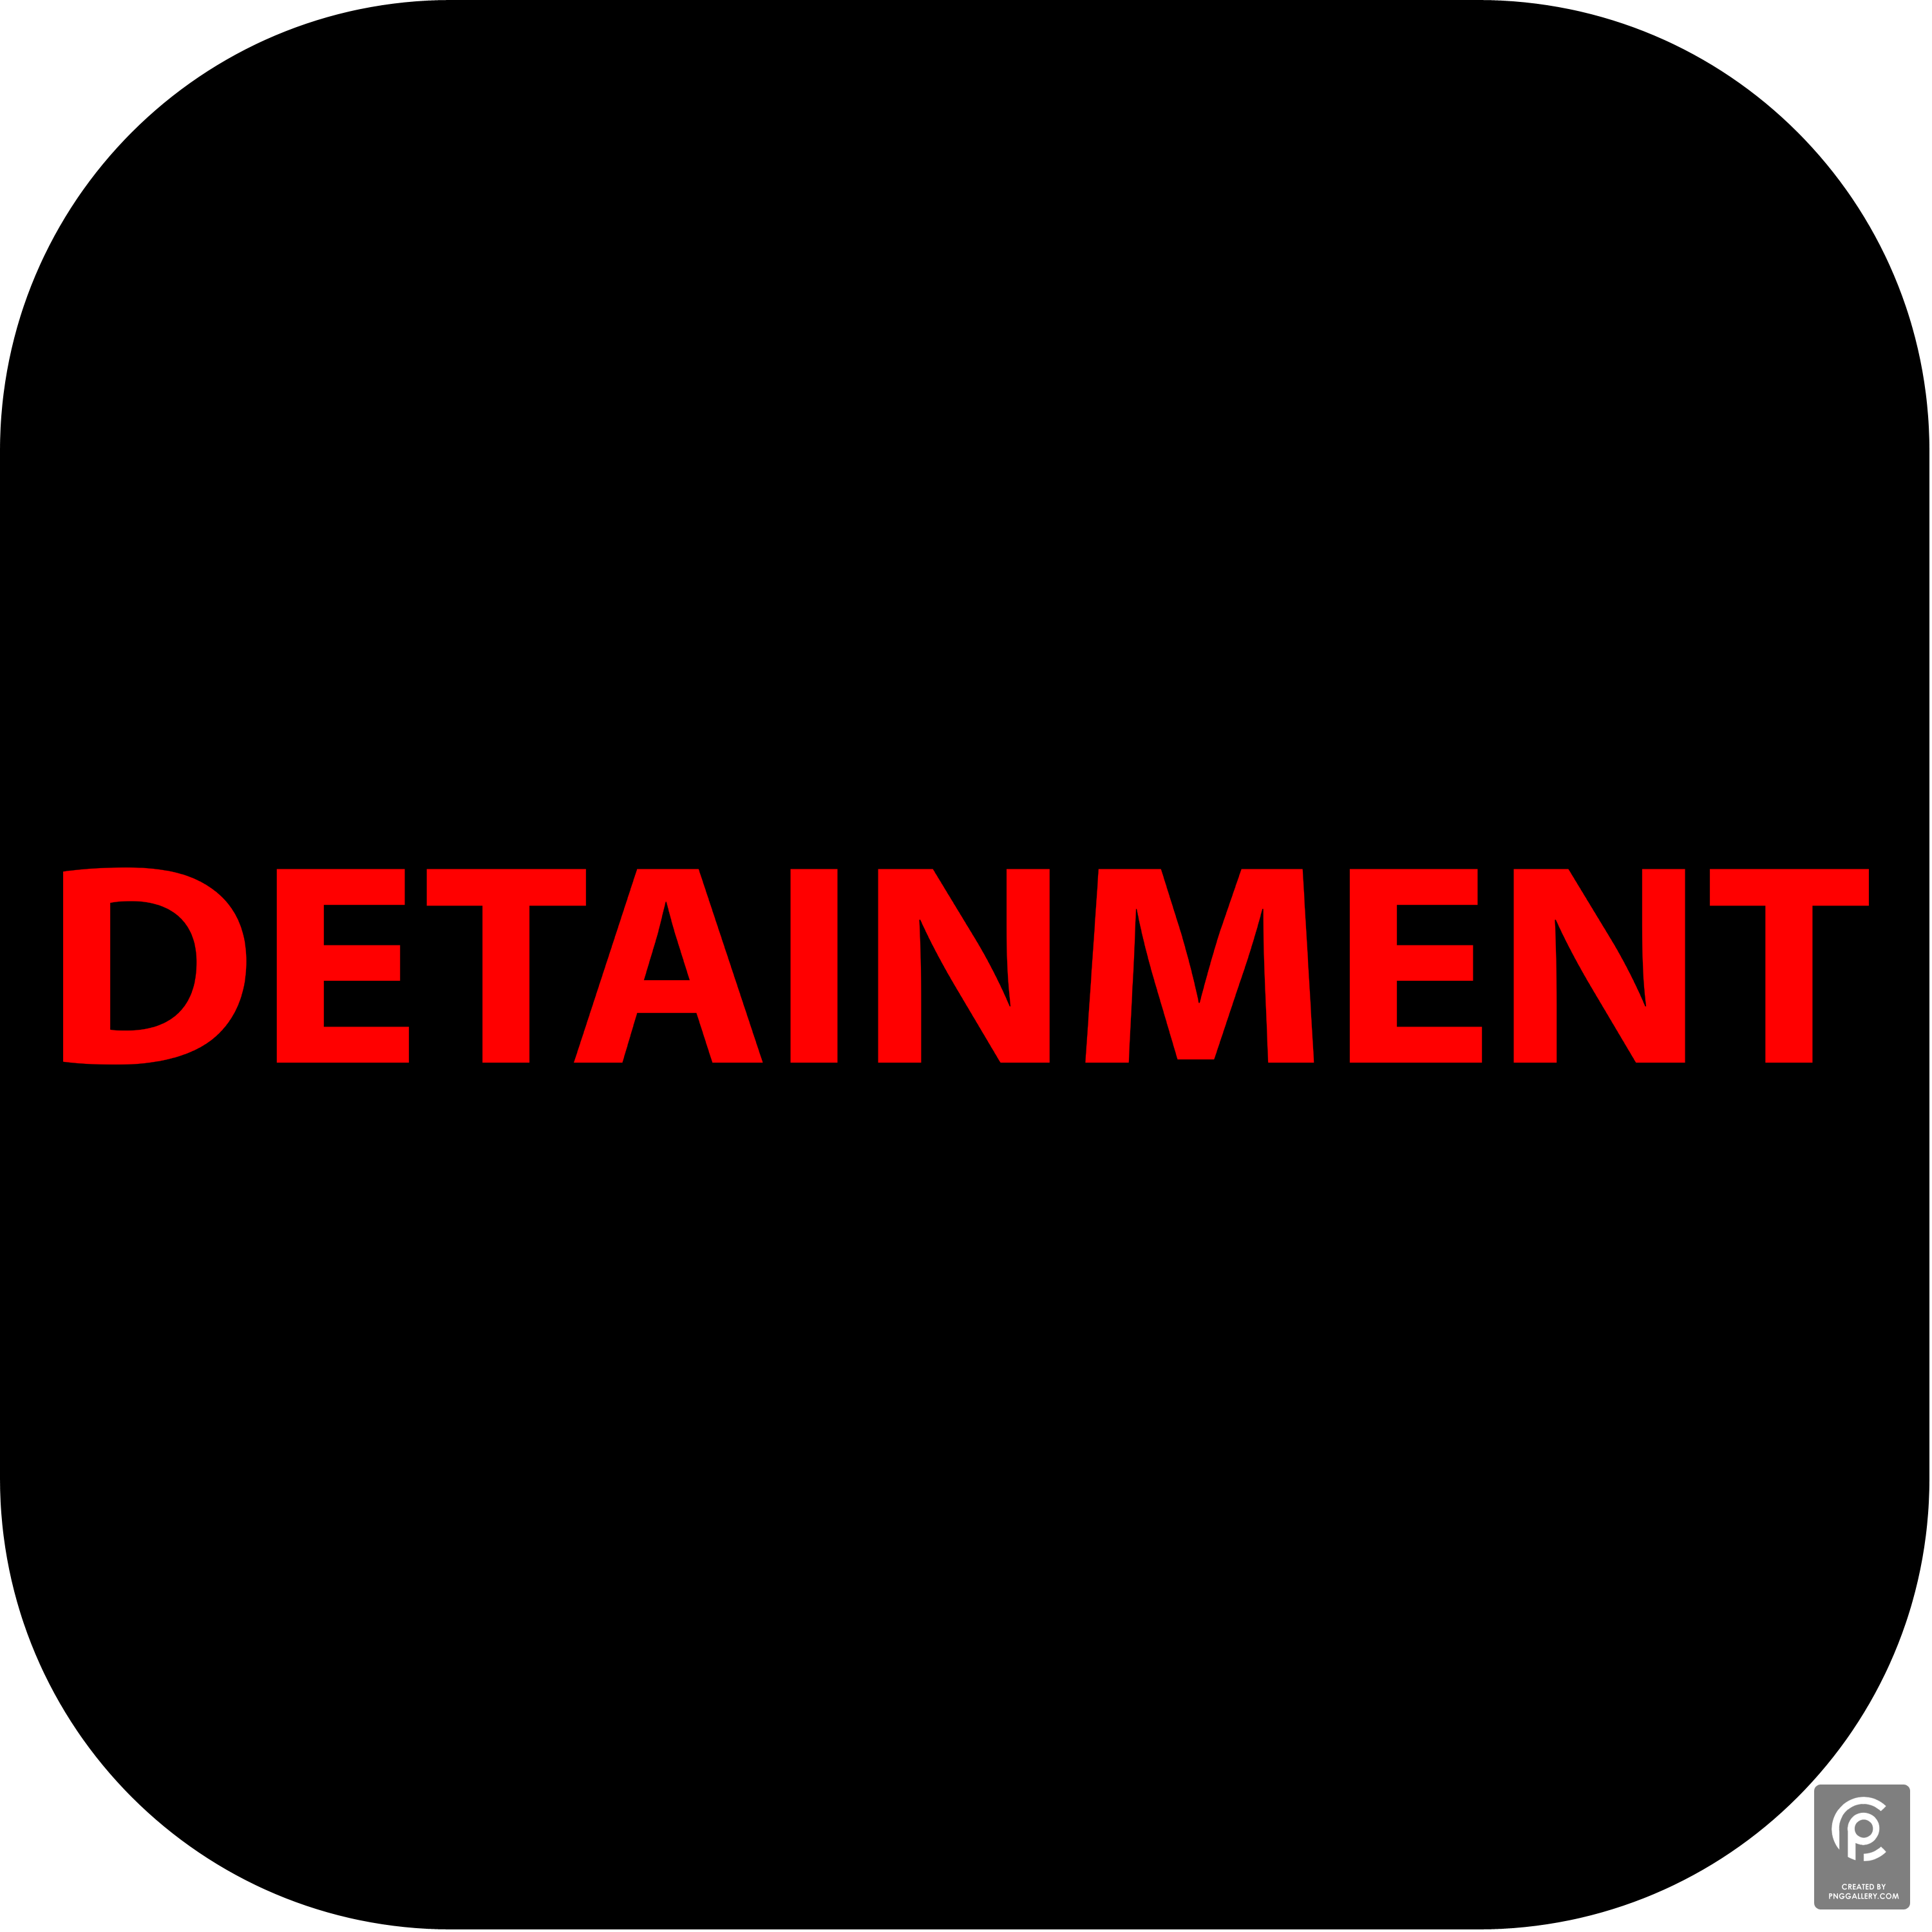 Detainment Logo Transparent Picture